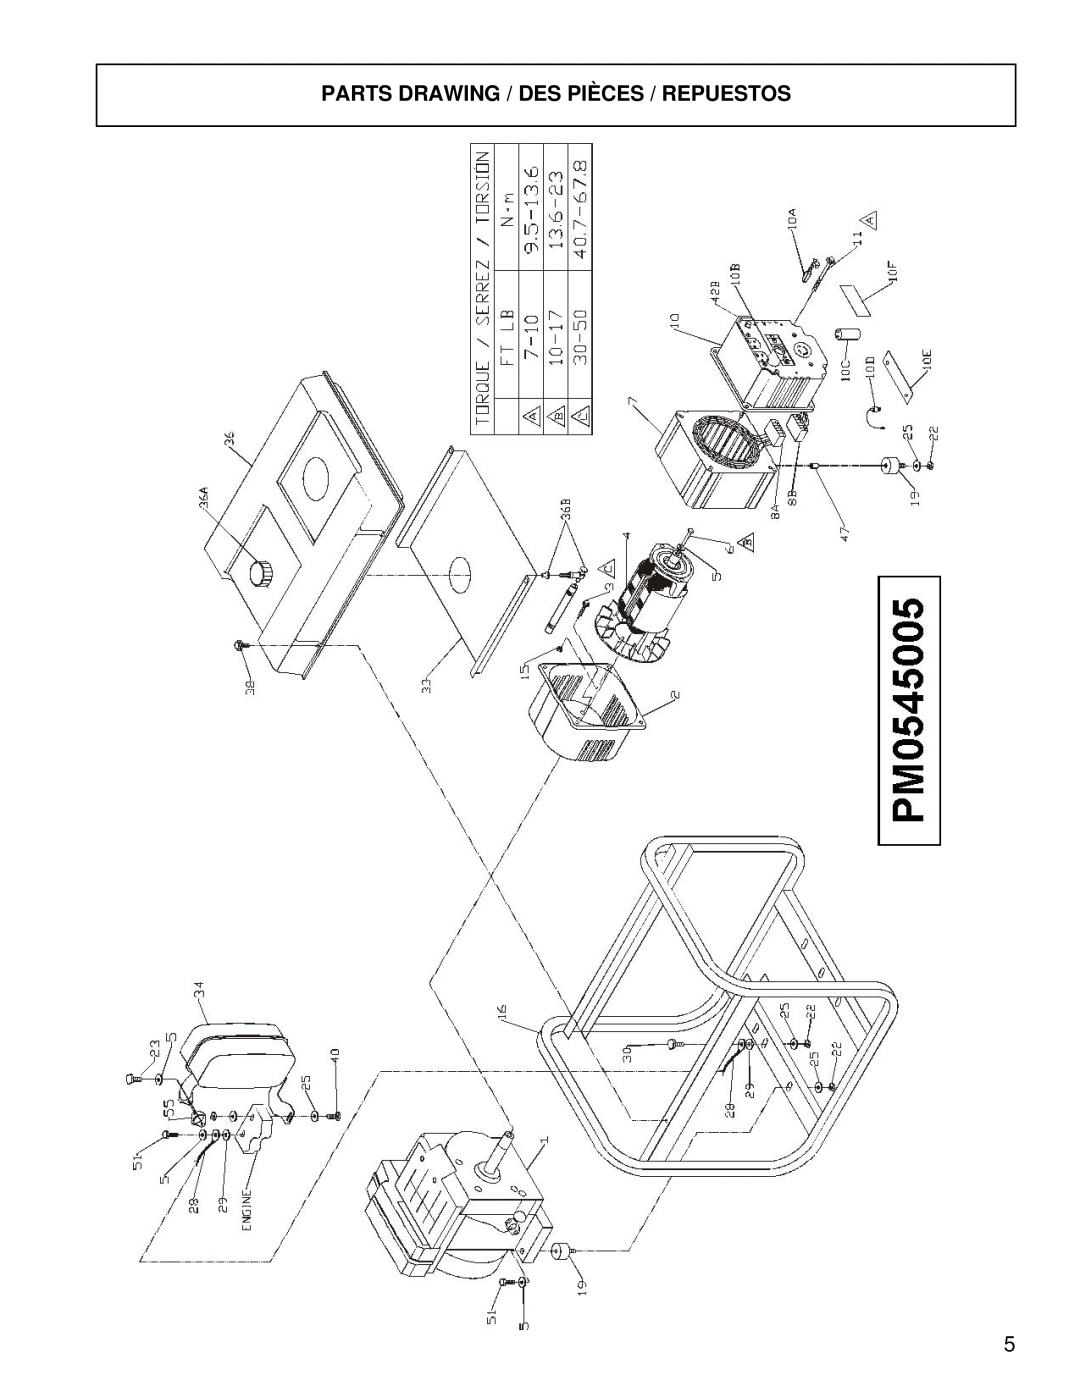 Coleman PM0545005 manual Parts Drawing / Des Pièces / Repuestos 